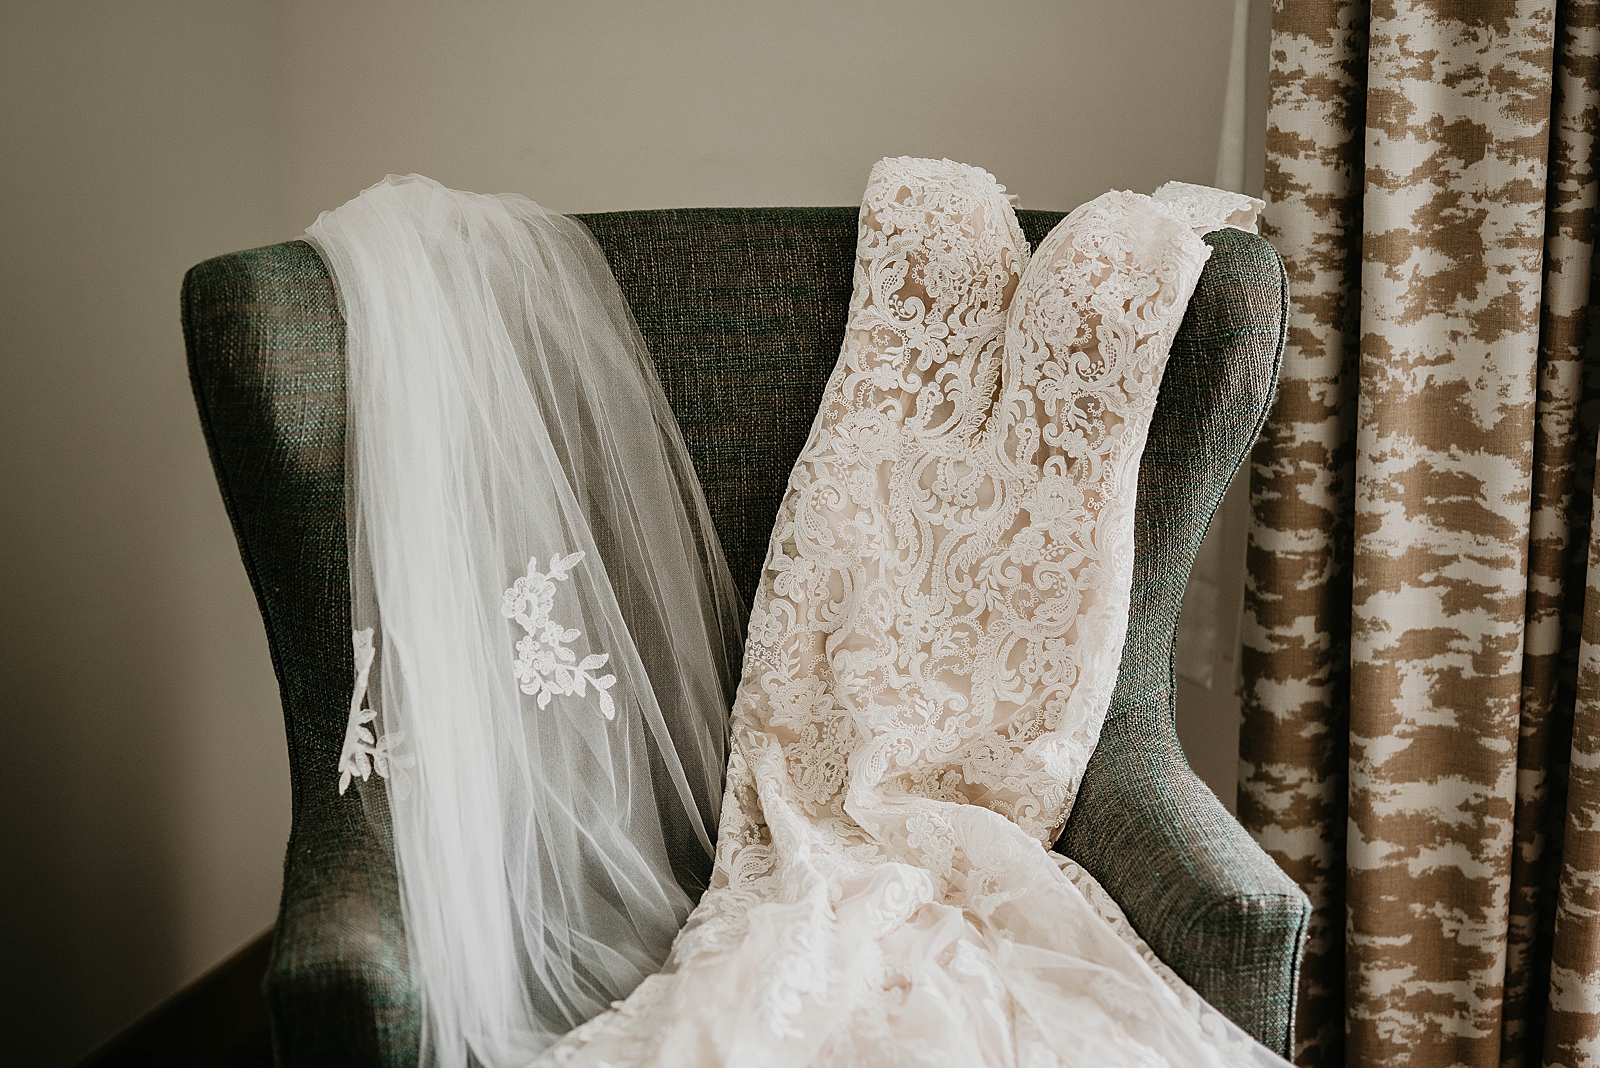 Wedding dress and veil draping on fabric chair